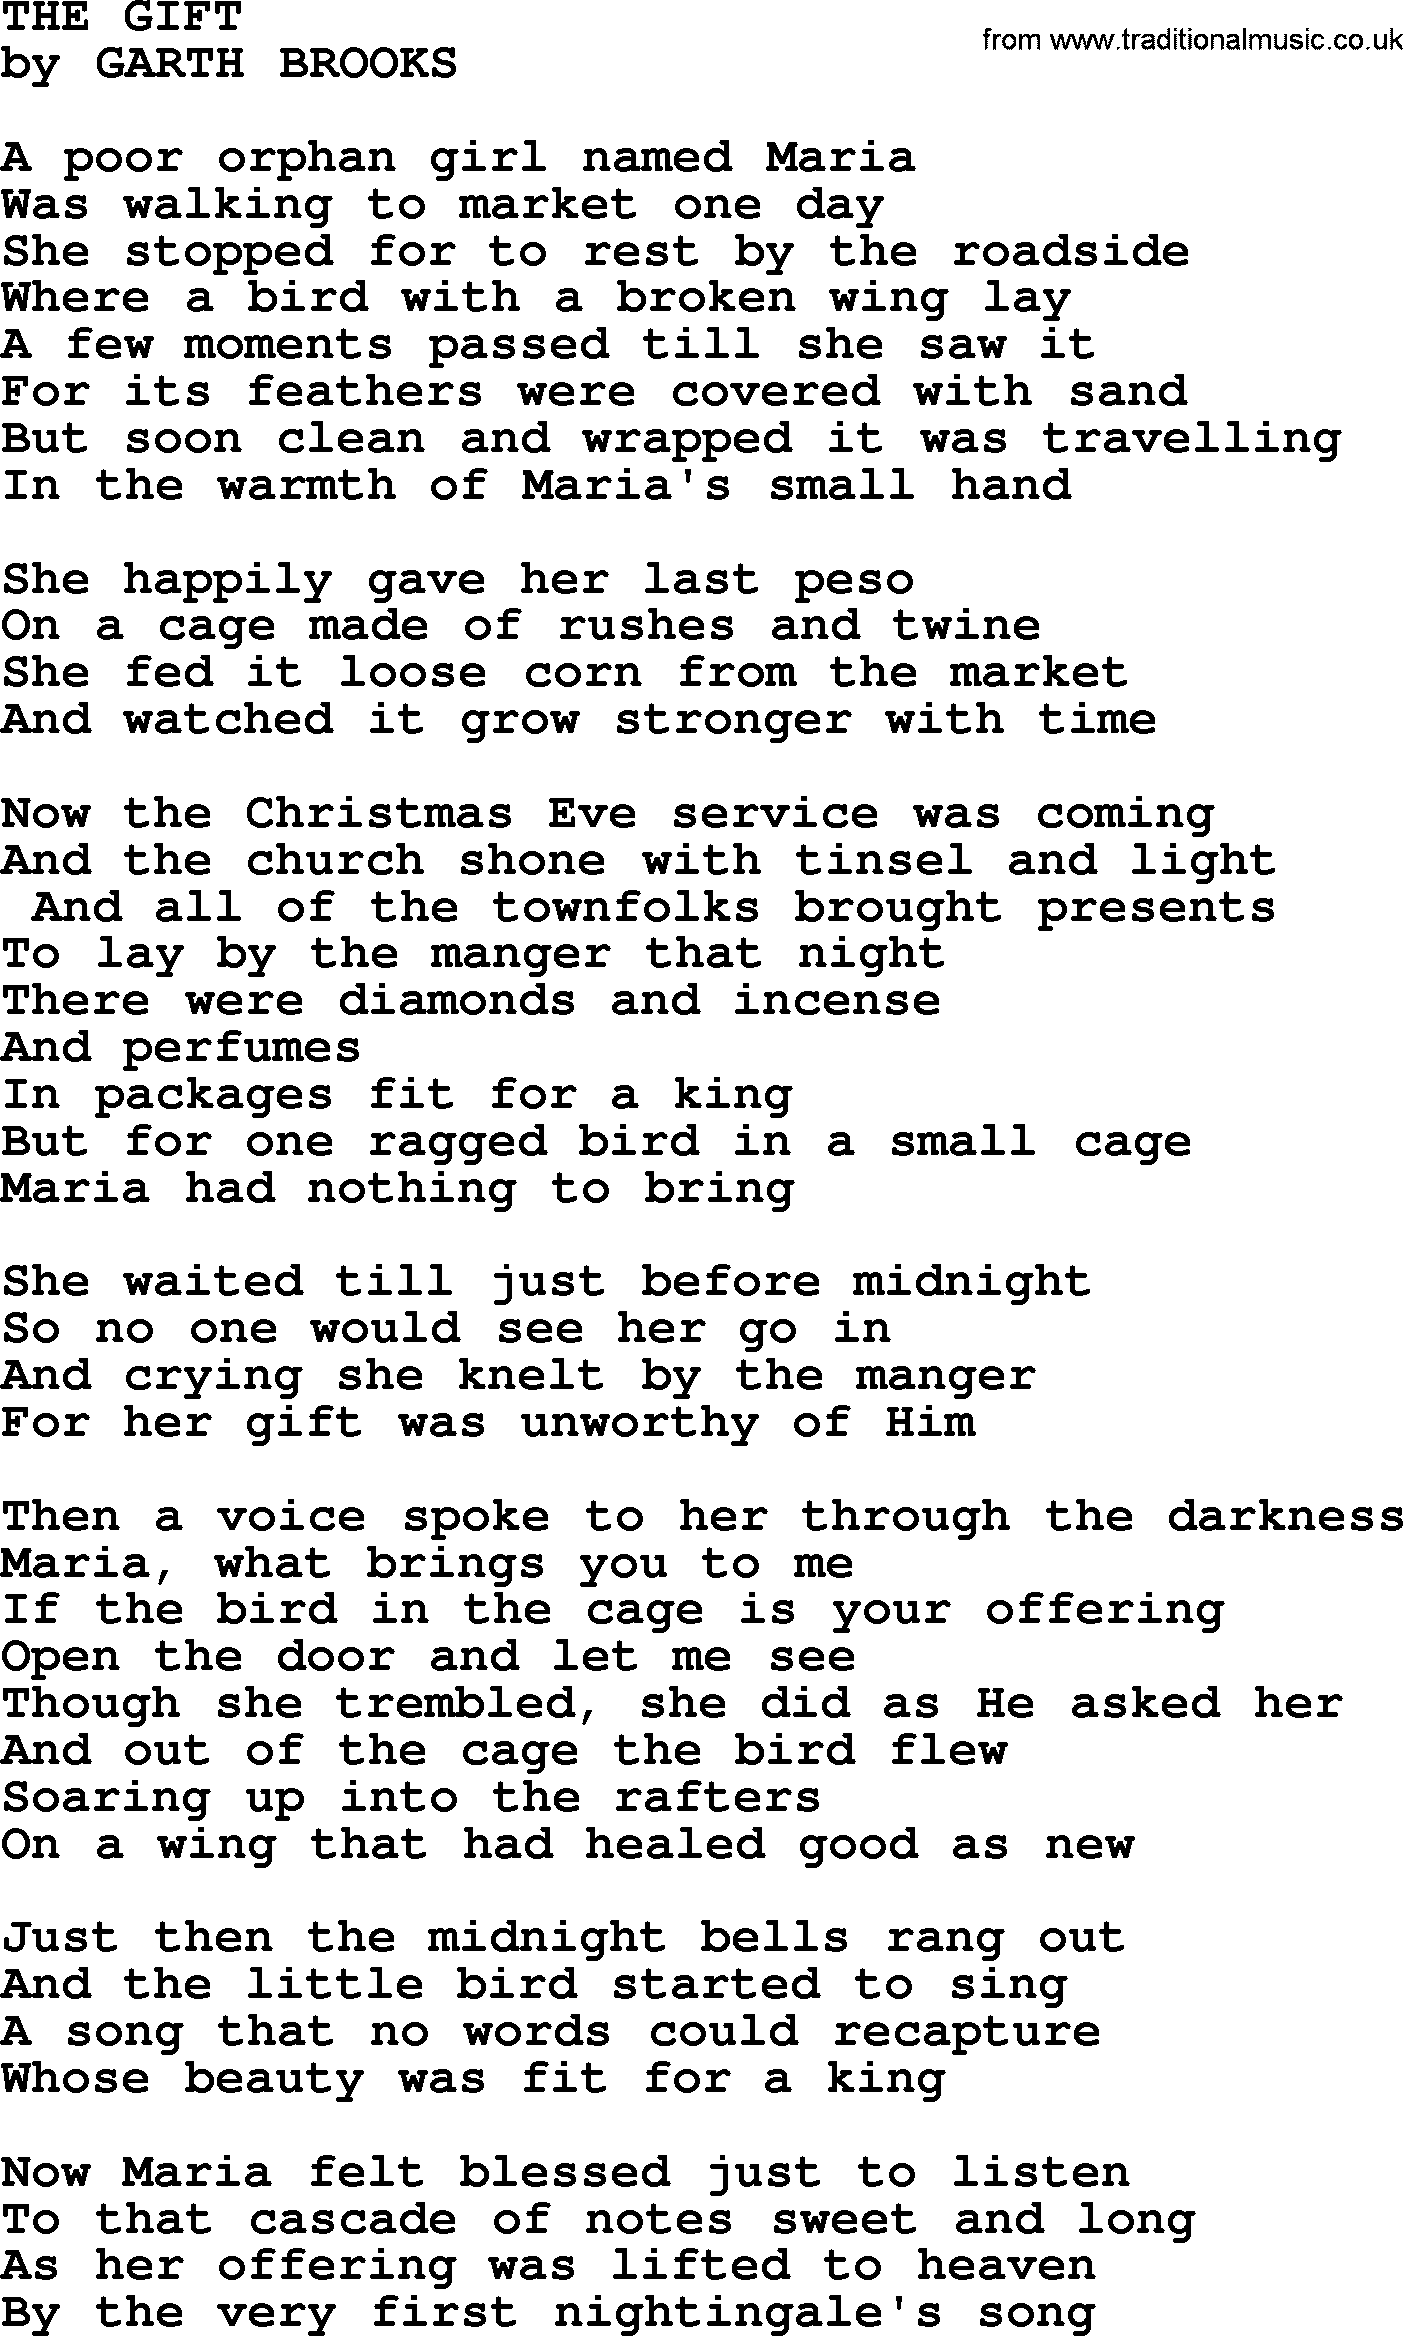 The Gift, by Garth Brooks lyrics